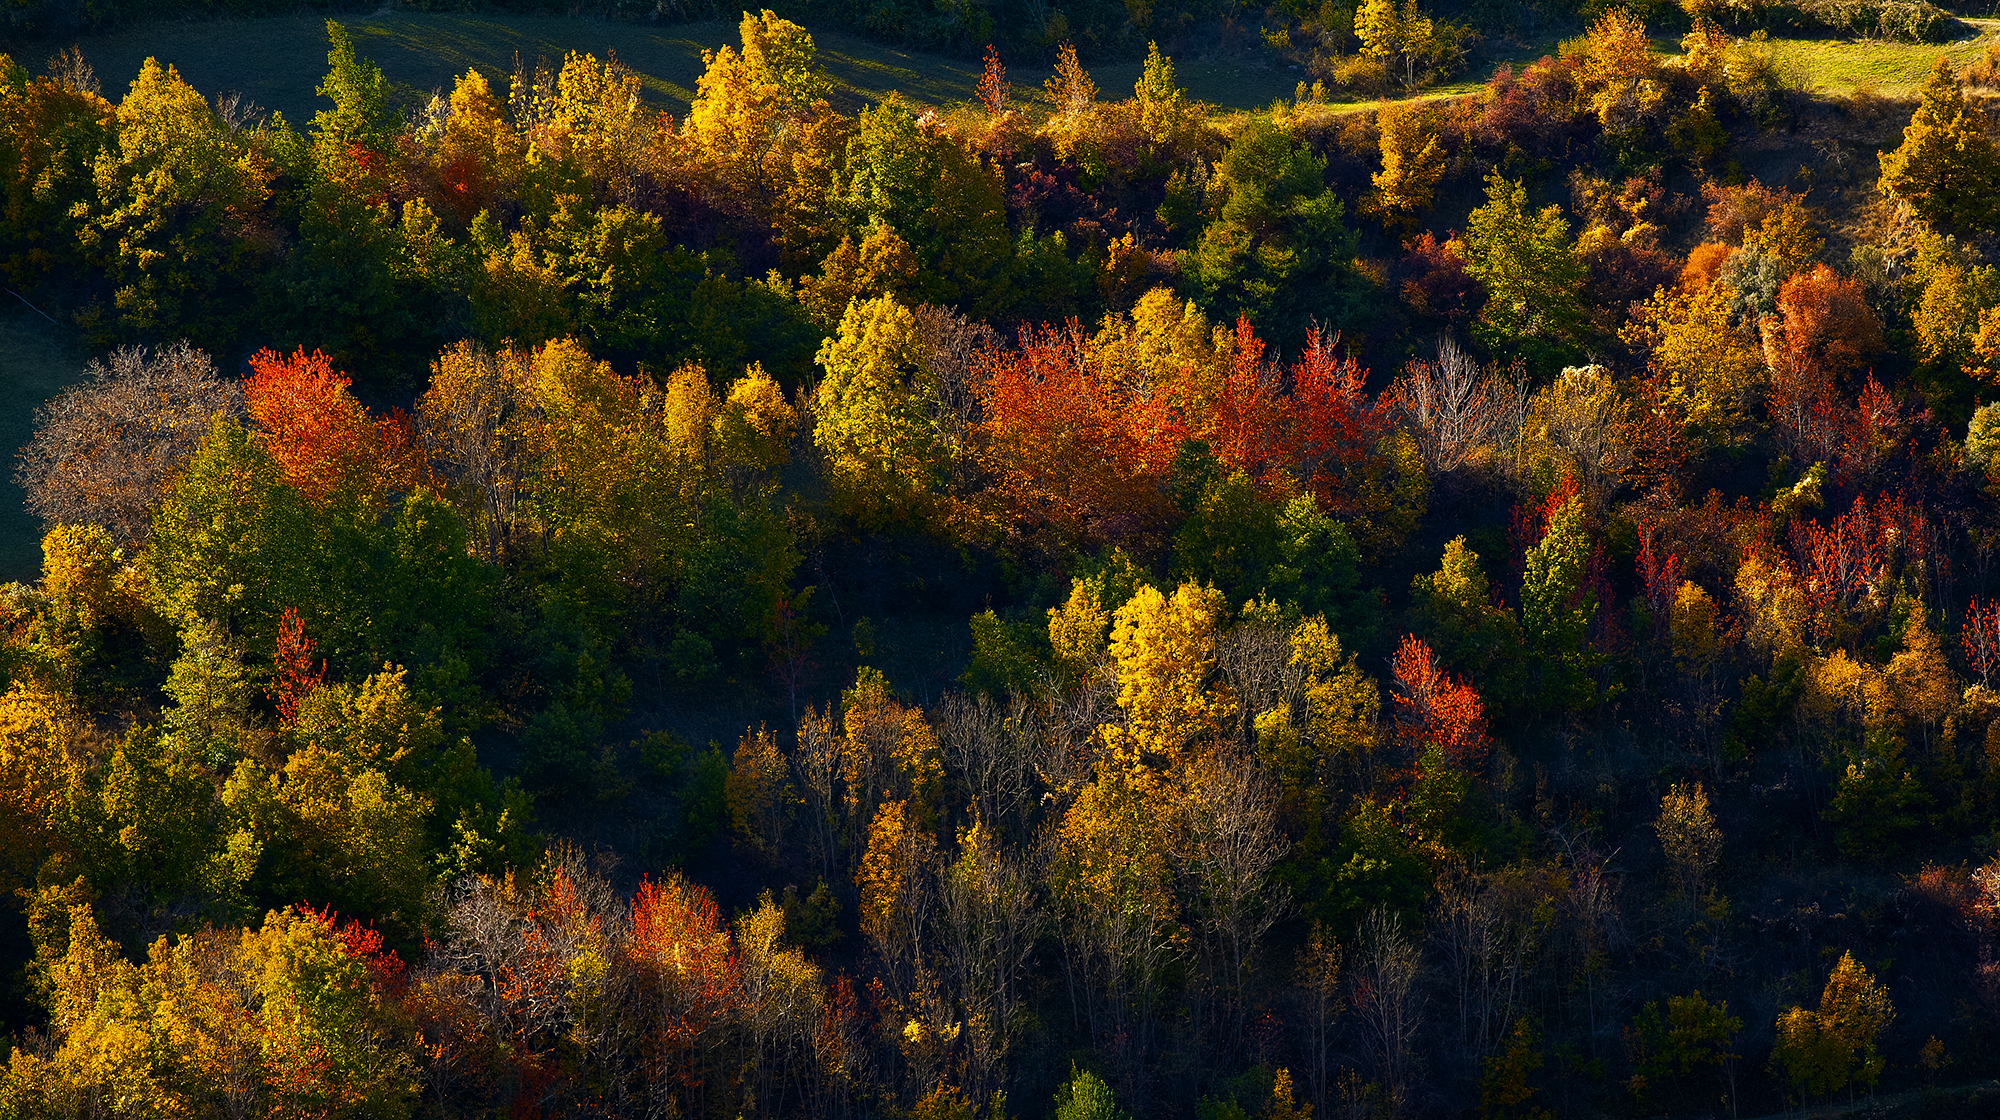 Paisajes, naturaleza, fotografía de paisajes, fotografía de naturaleza, Pirineos, árbol otoño, hojas otoño, bosque otoño